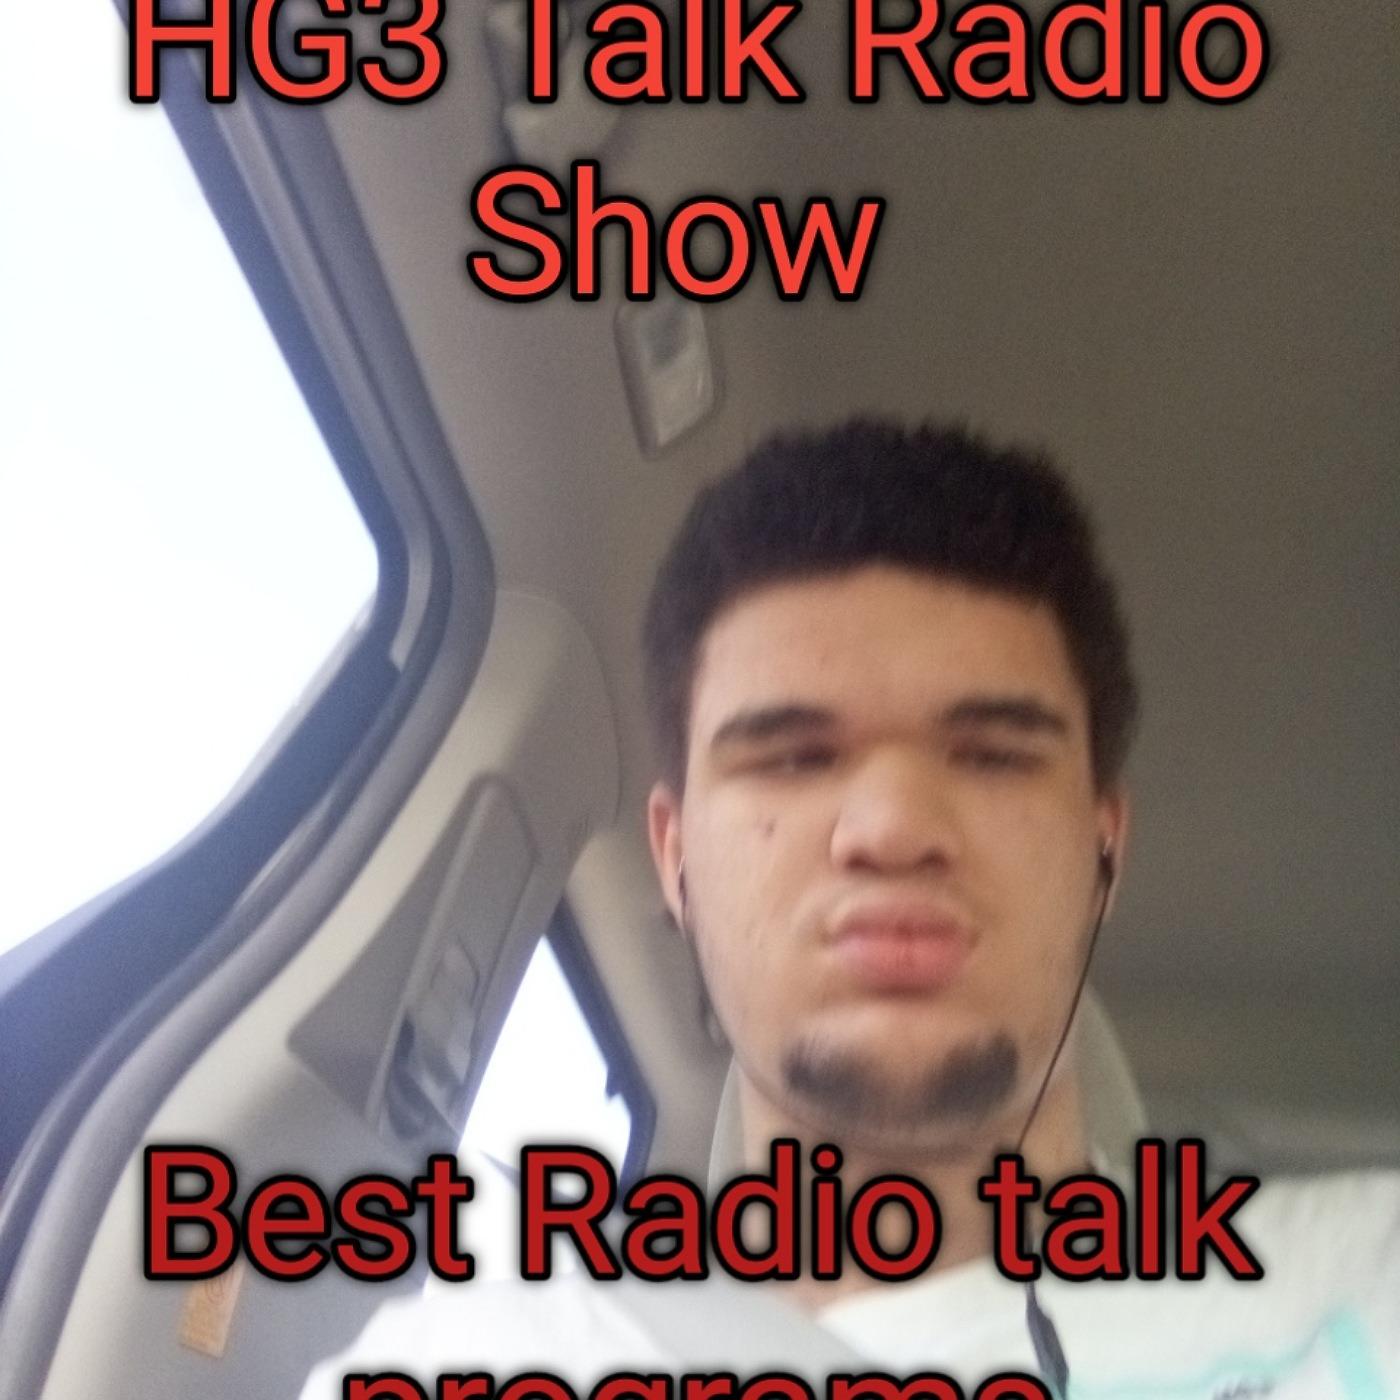 The Best HG3 Radio Talk Show